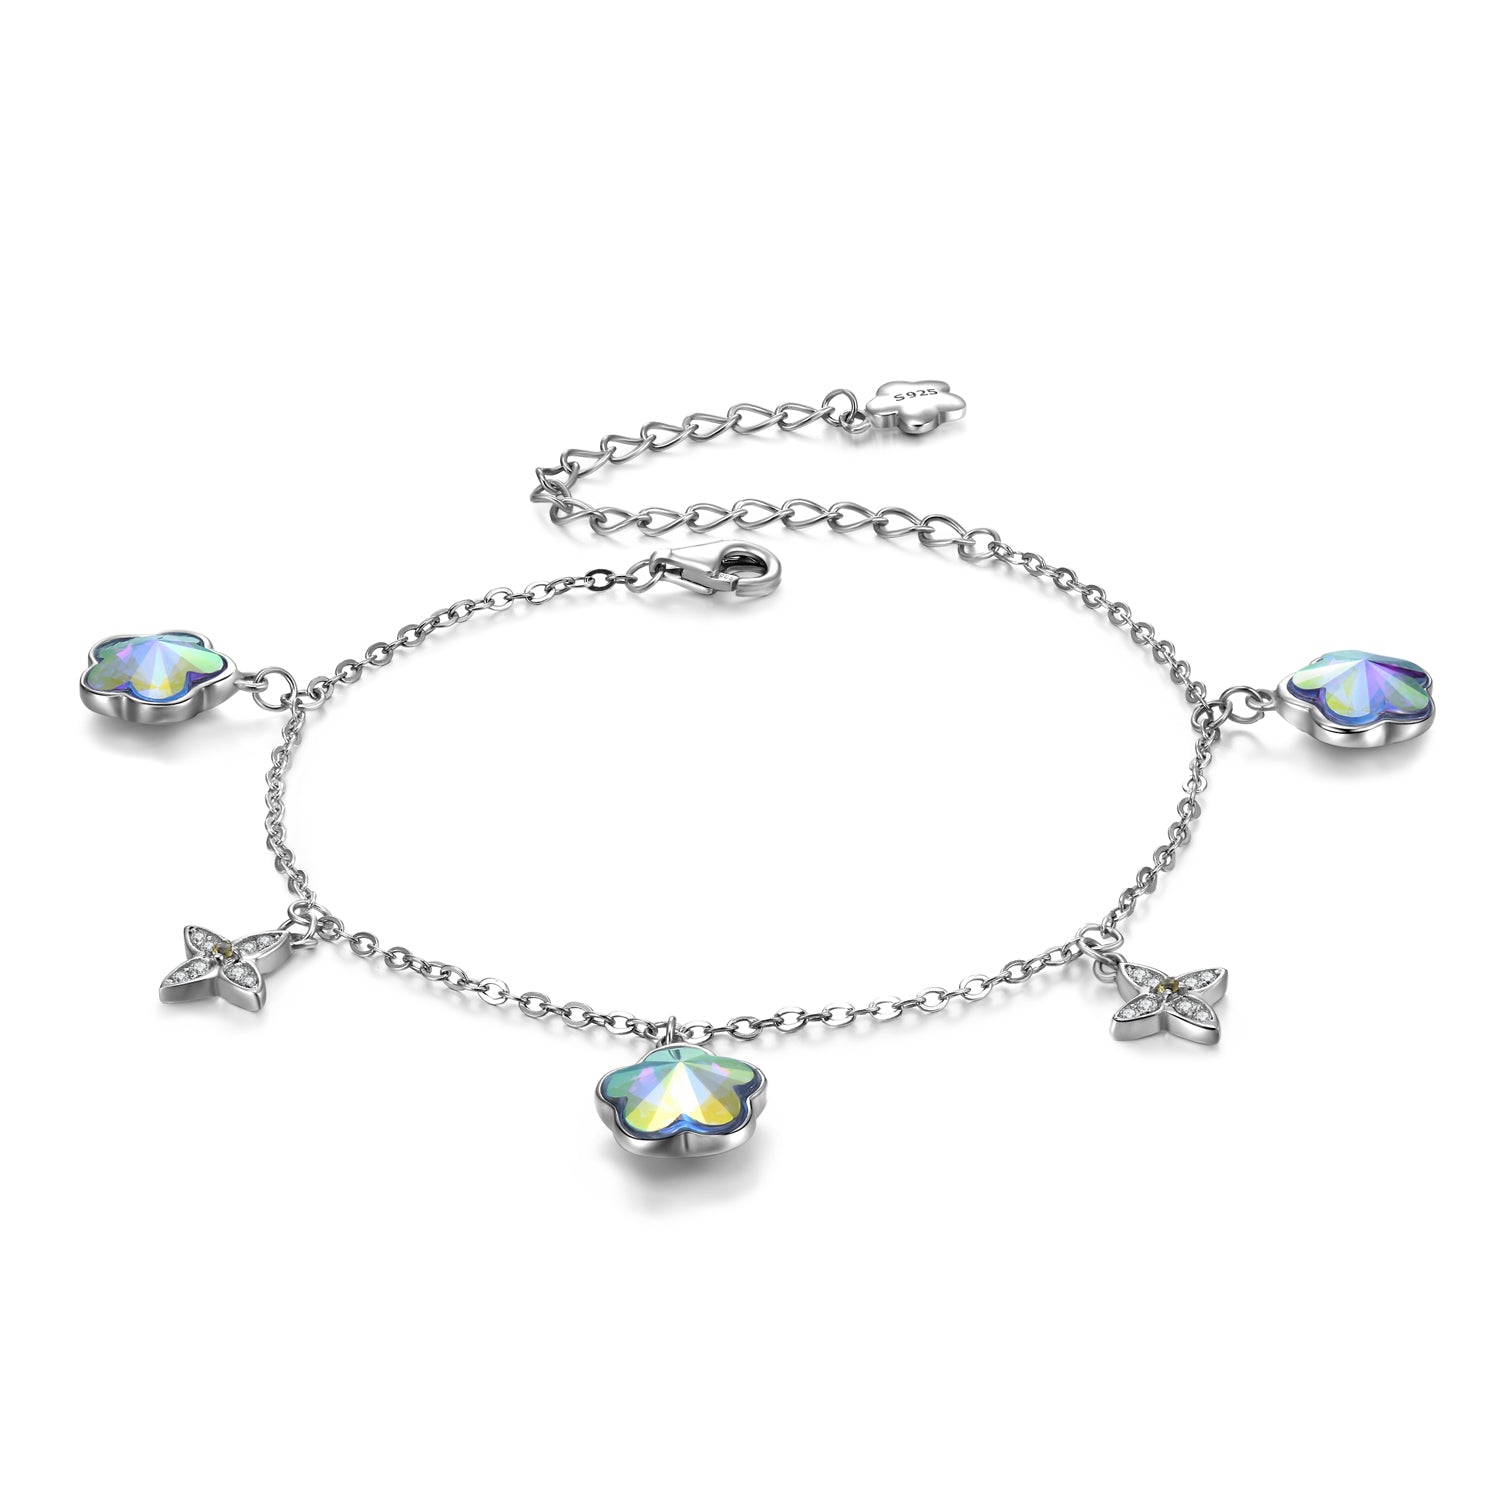 Bracelet with zirconia pendants